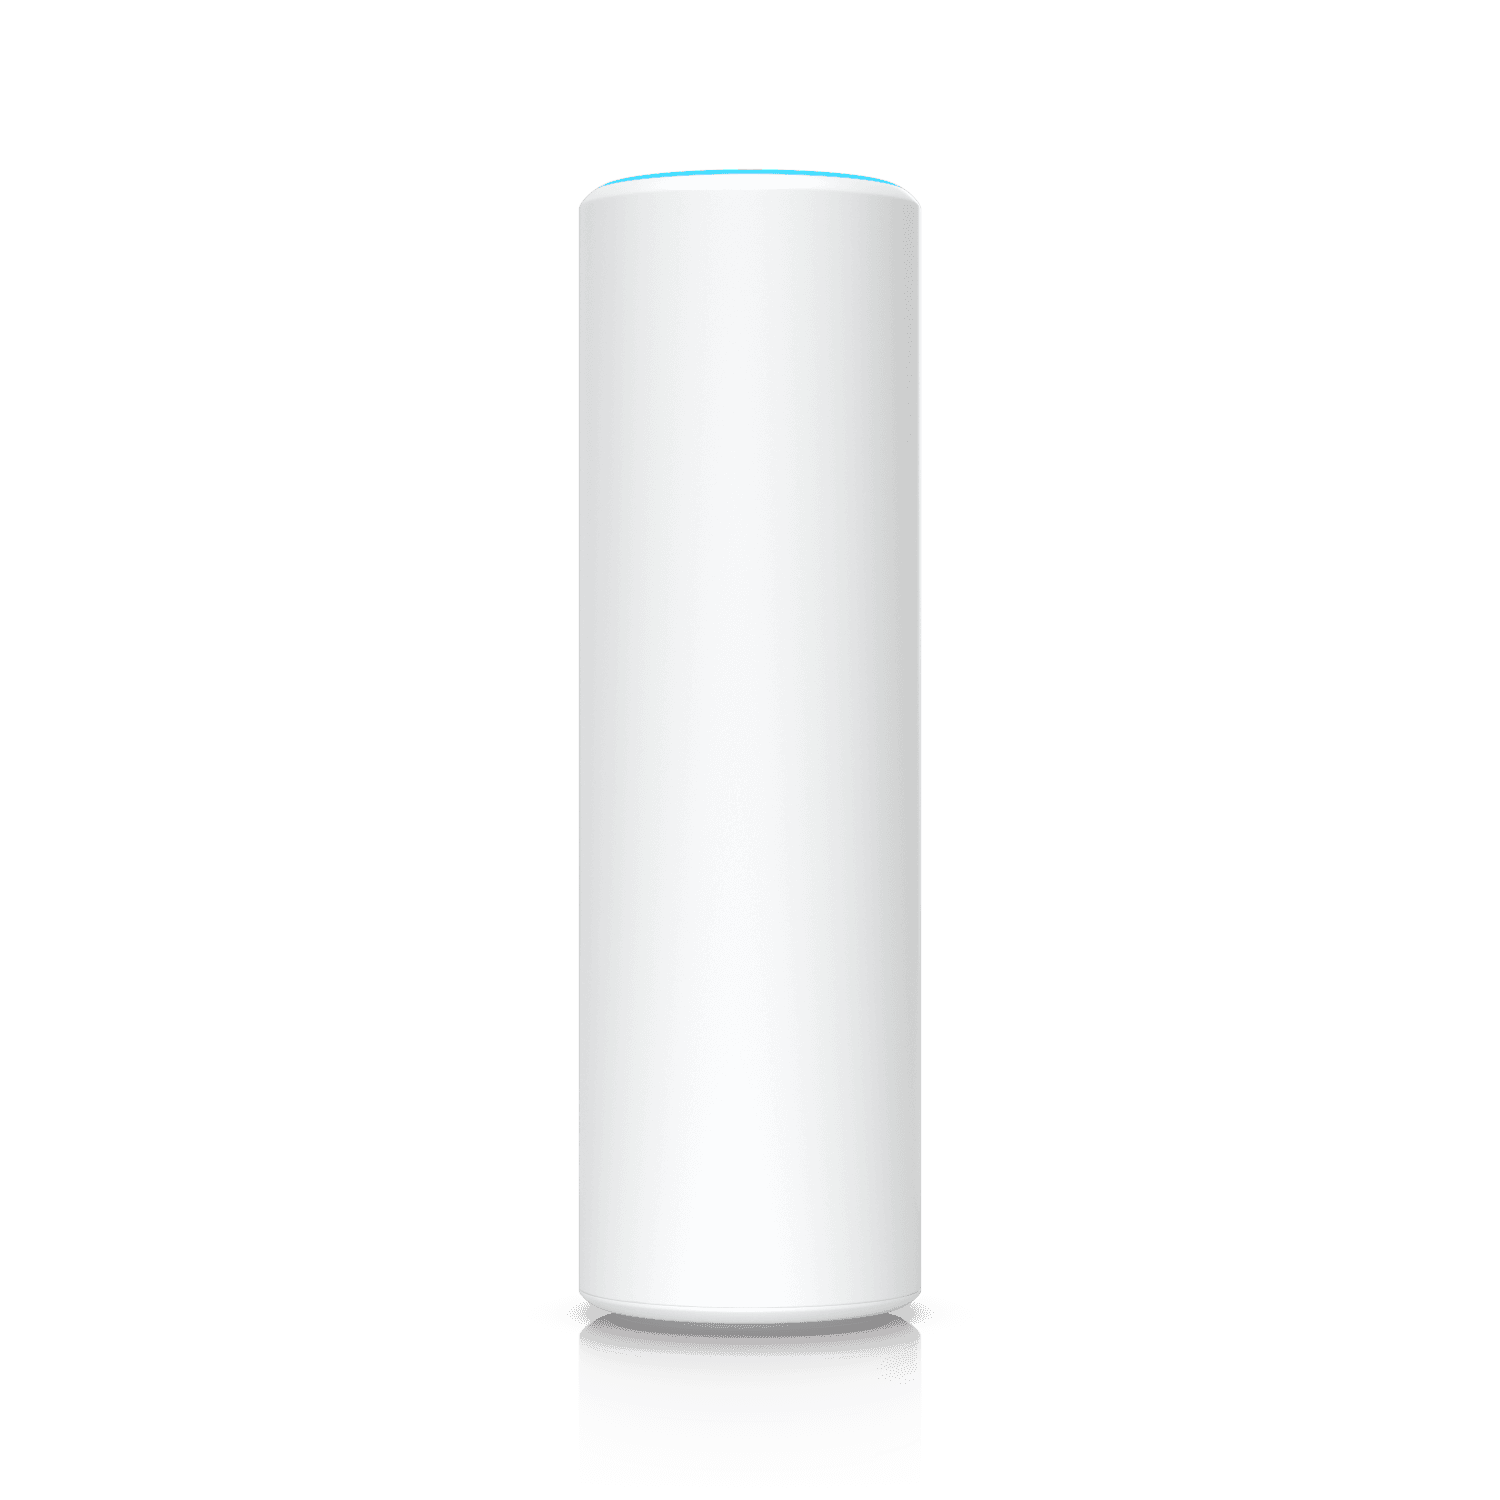 UniFi WiFi 6 Long Range Meshable Access Point – StayFi